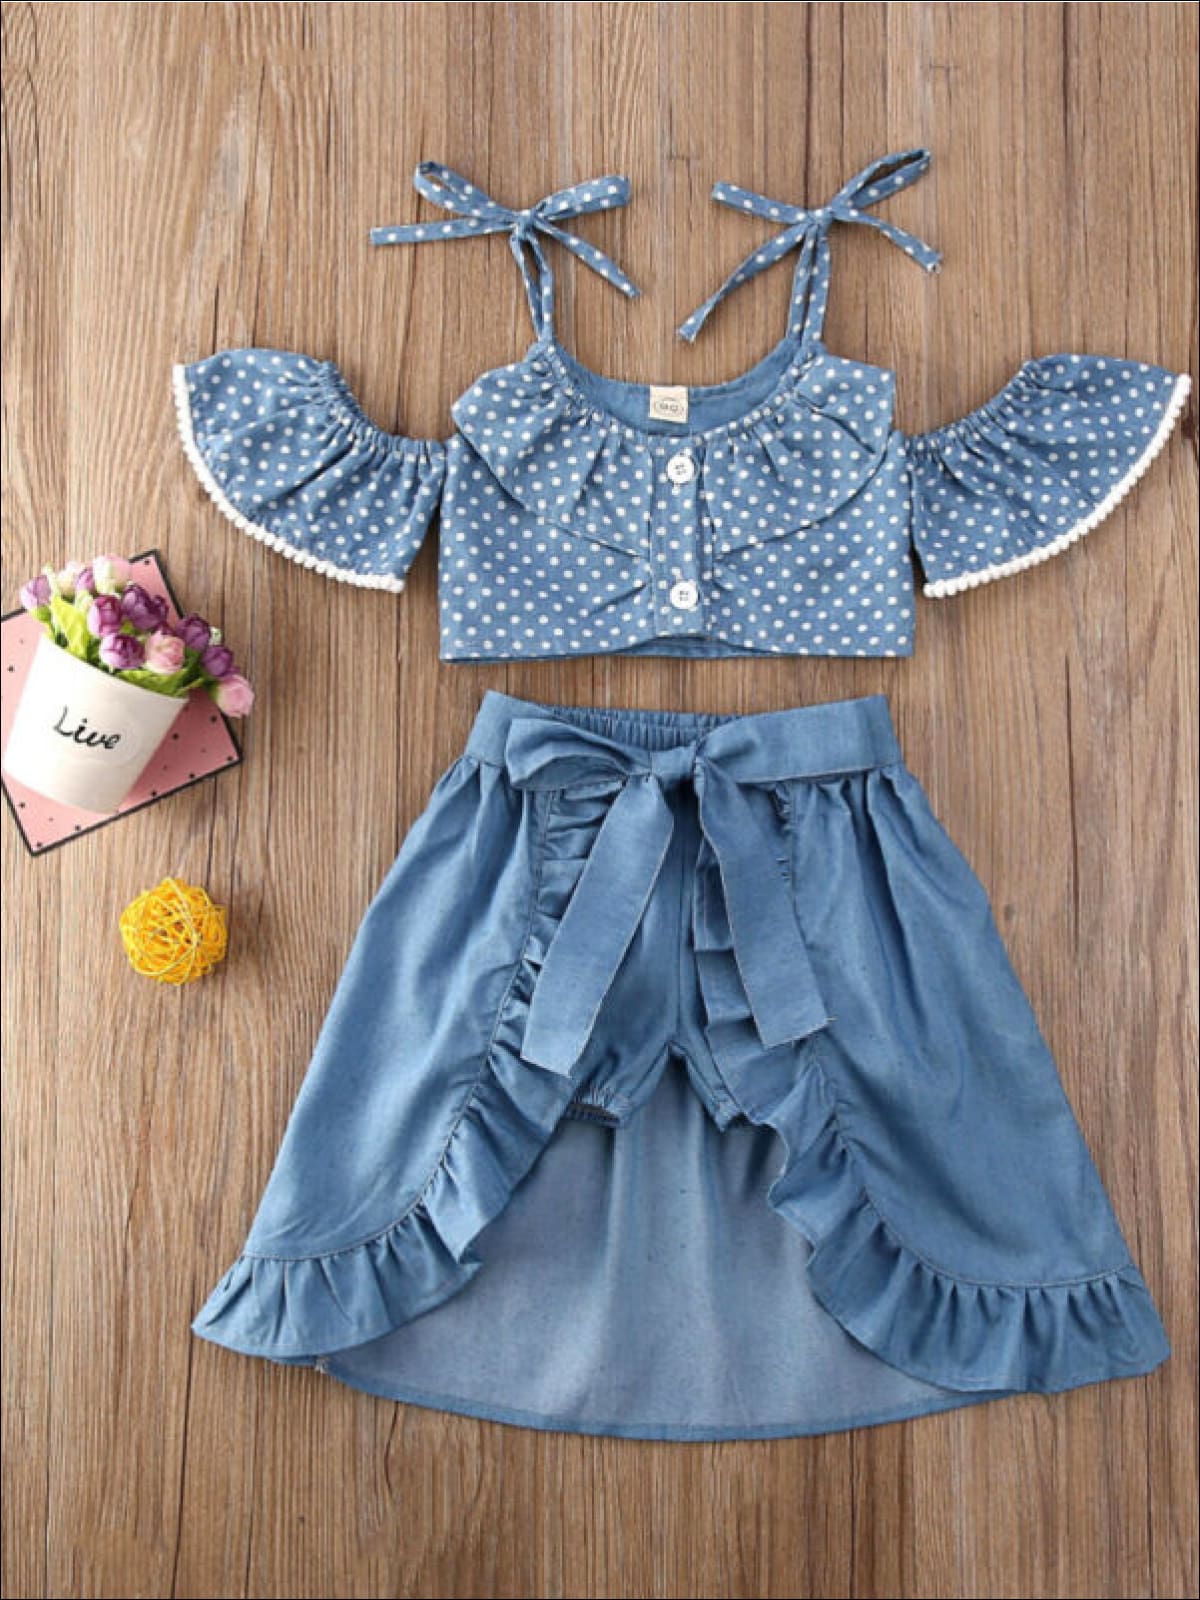 Girls Spring Outfits | Polka Dot Top & Chambray Skirt Overlay Shorts